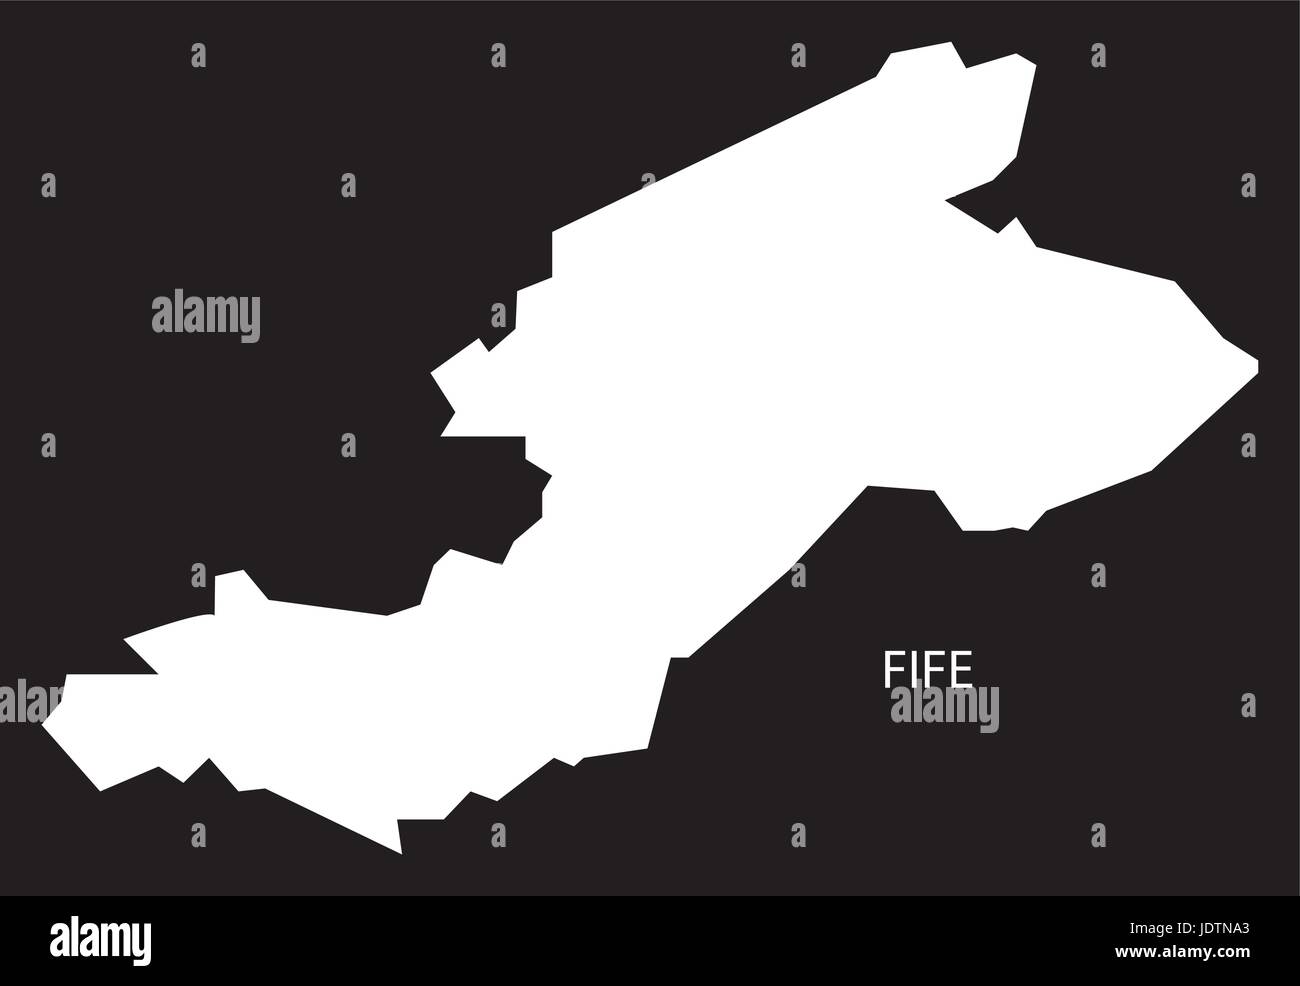 Fife Scotland map black inverted silhouette illustration Stock Vector